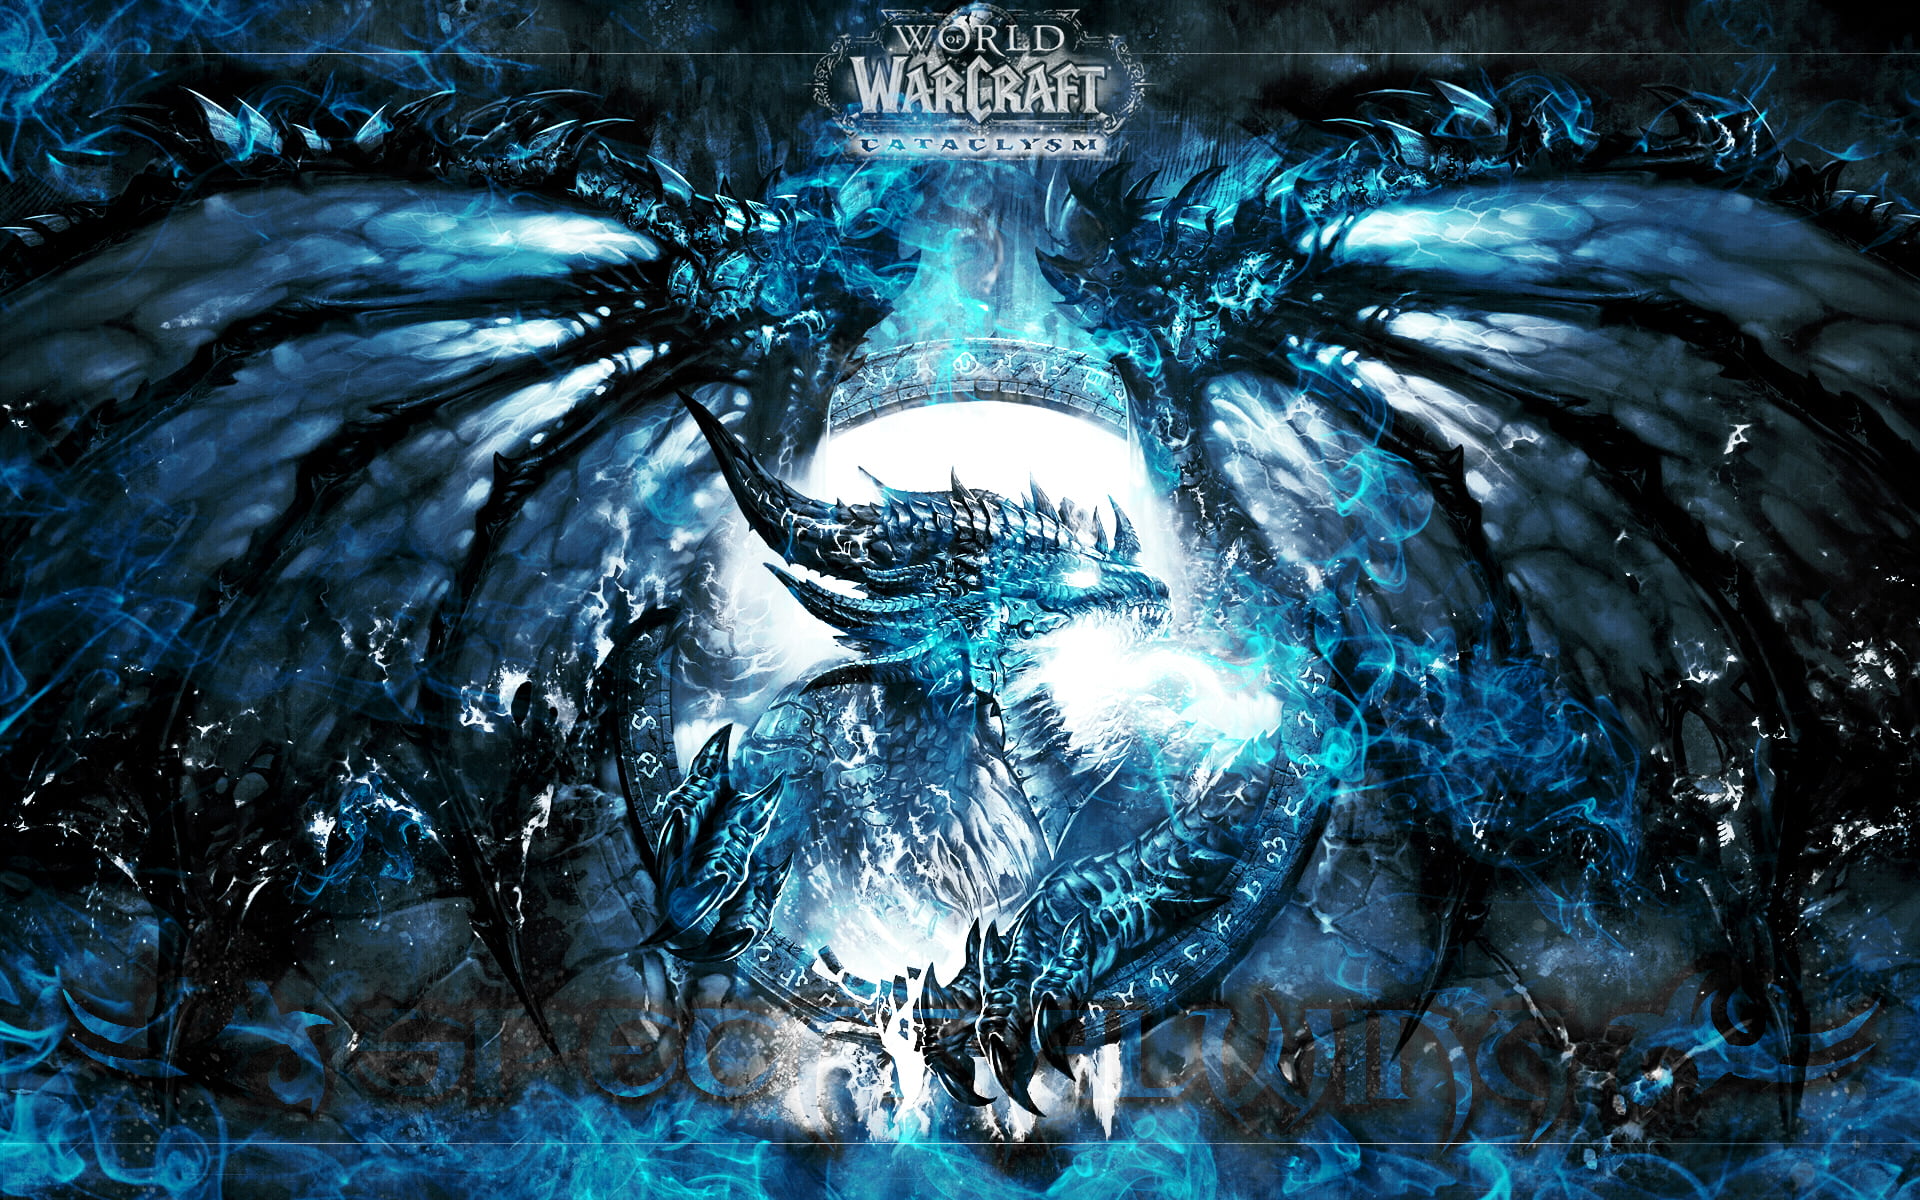 World of Warcraft digital wallpaper, WoW, Cataclysm, Dragon, Deathwing